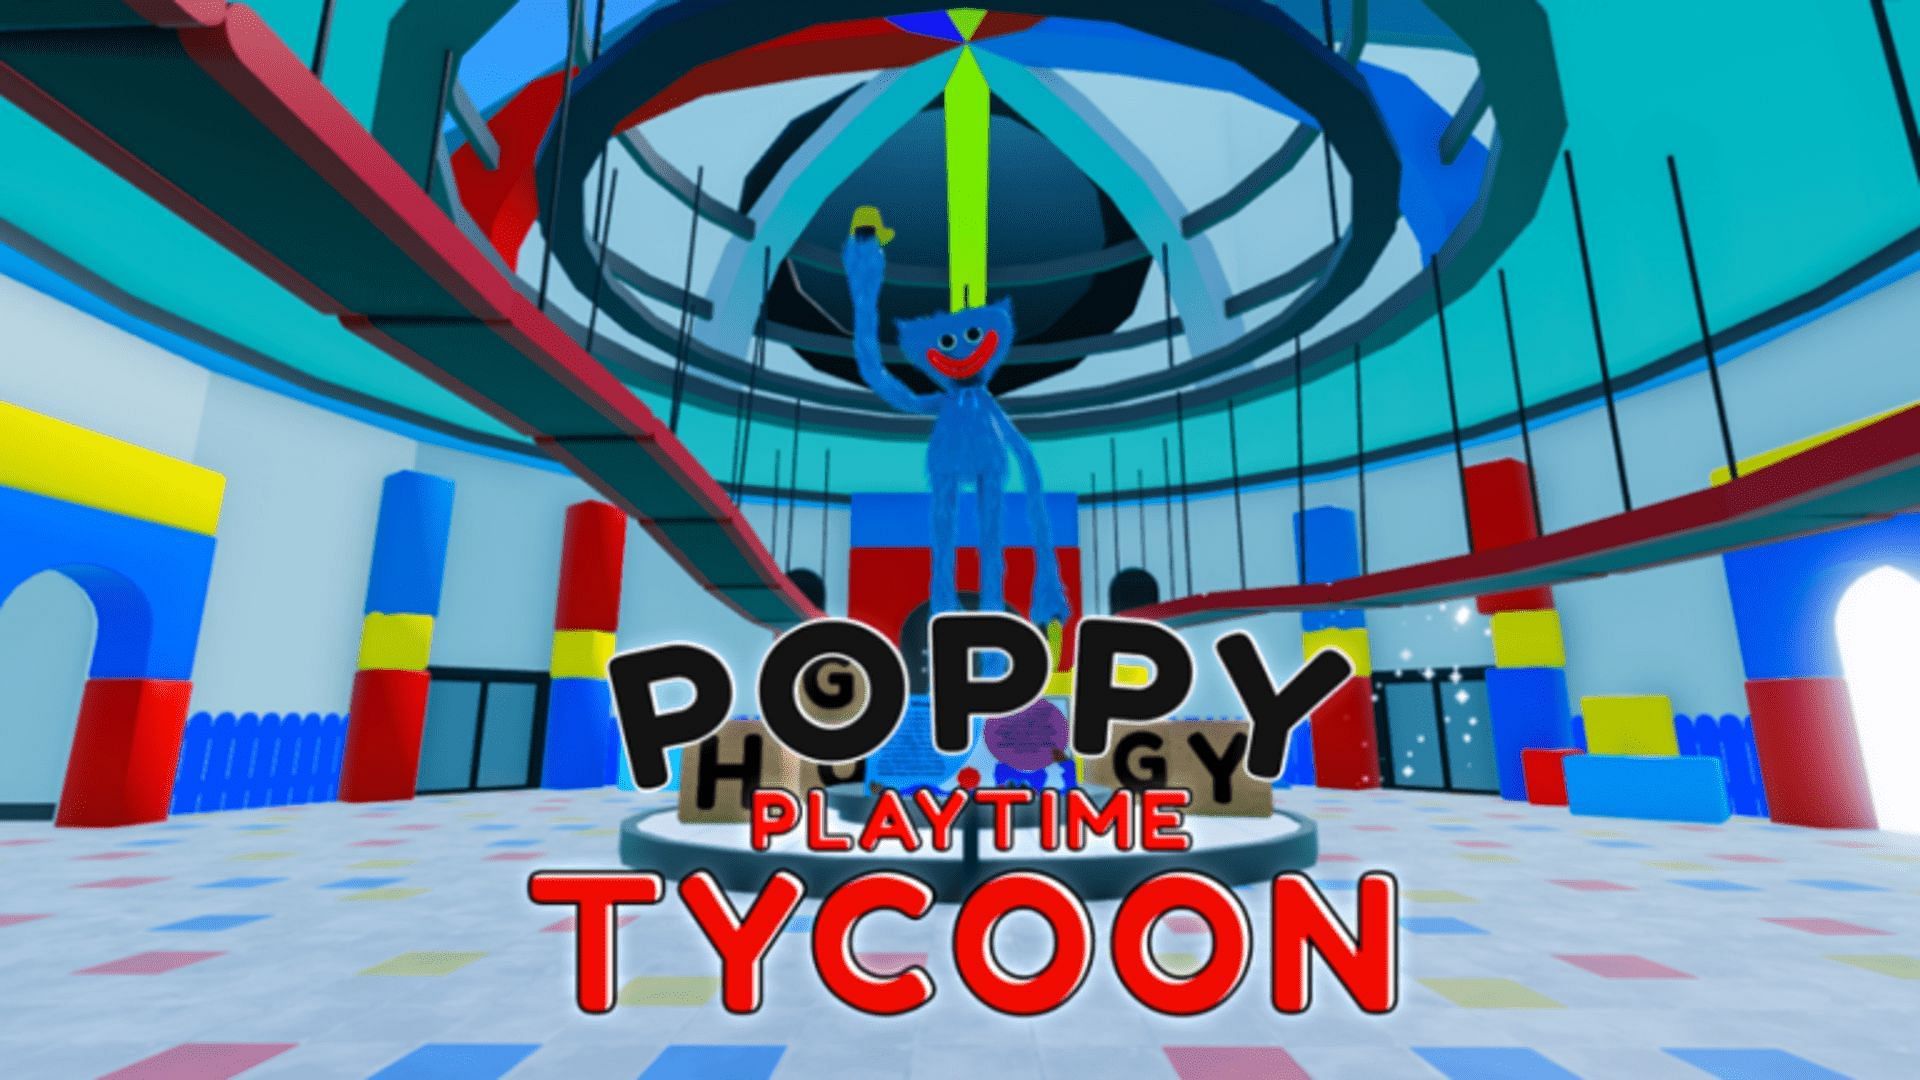 Poppy Playtime Tycoon codes